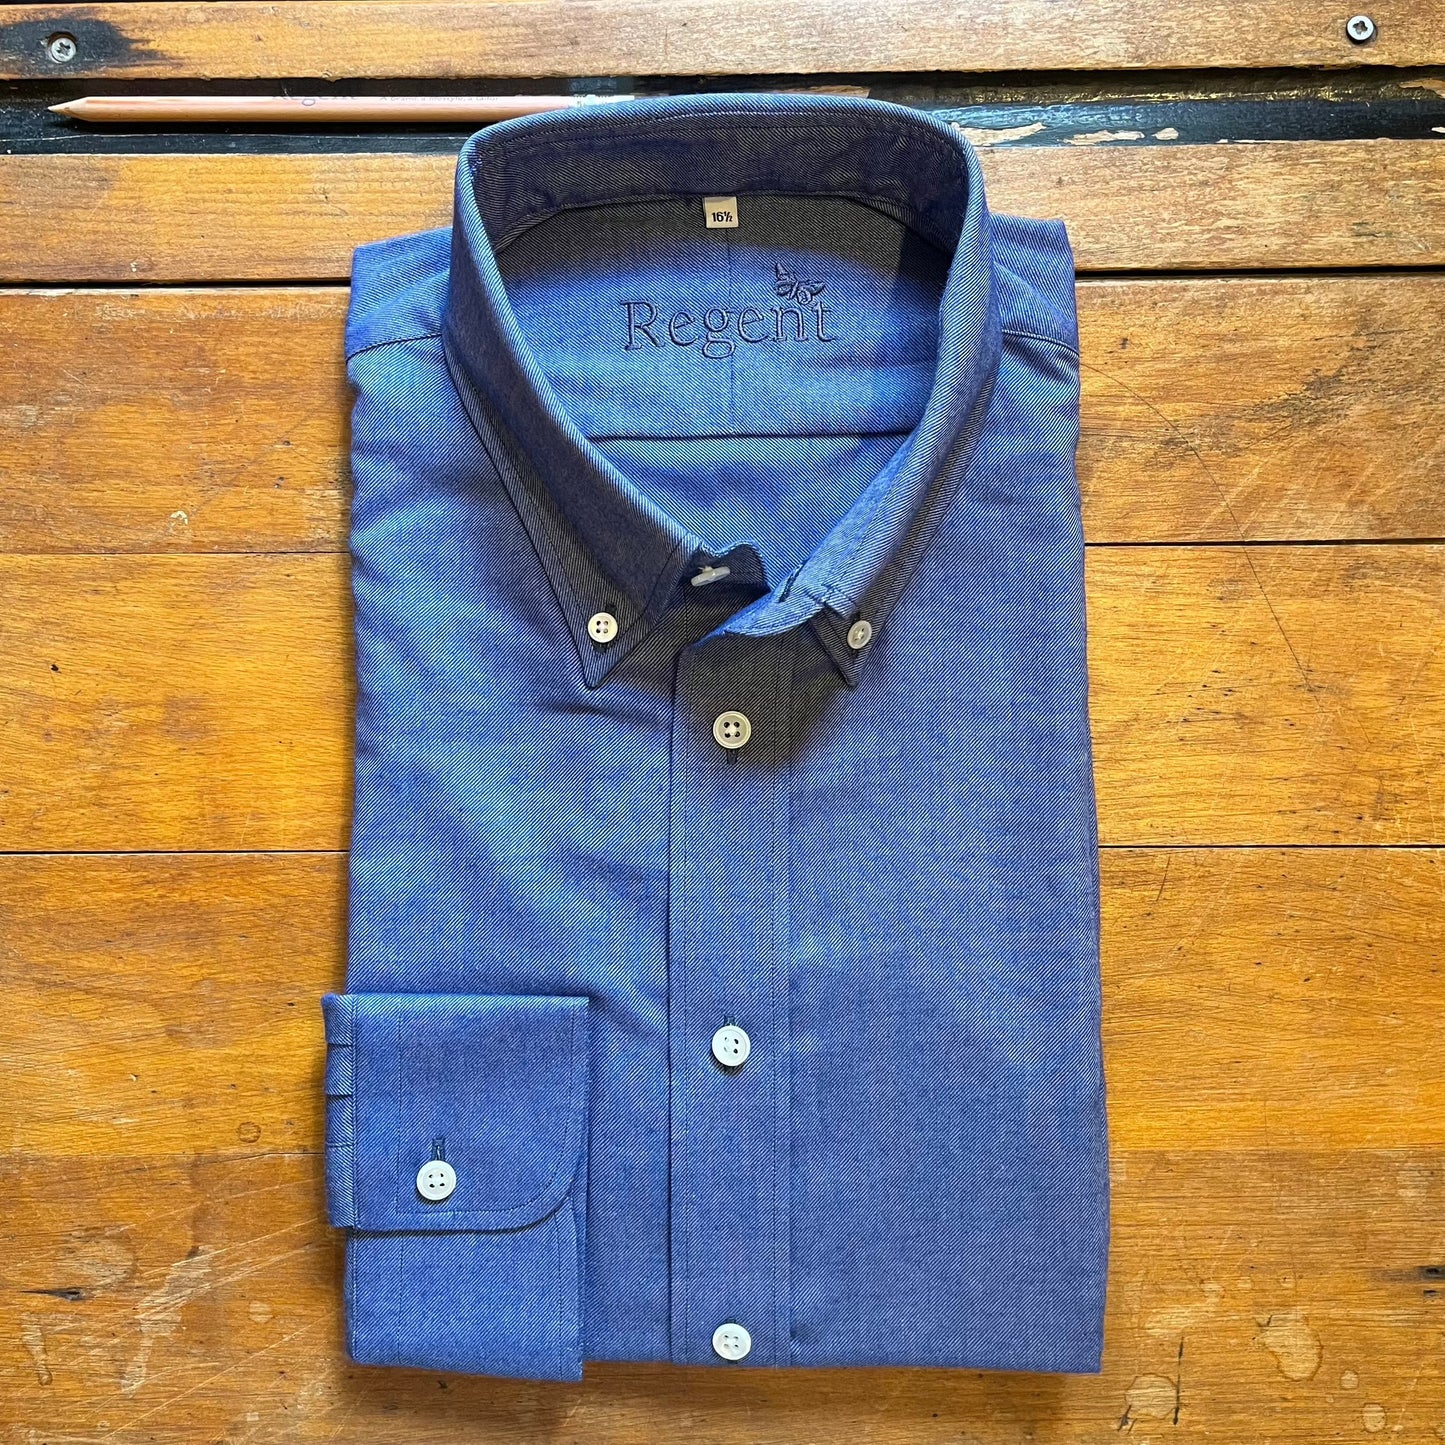 Indigo blue cotton flannel shirt with button down collar